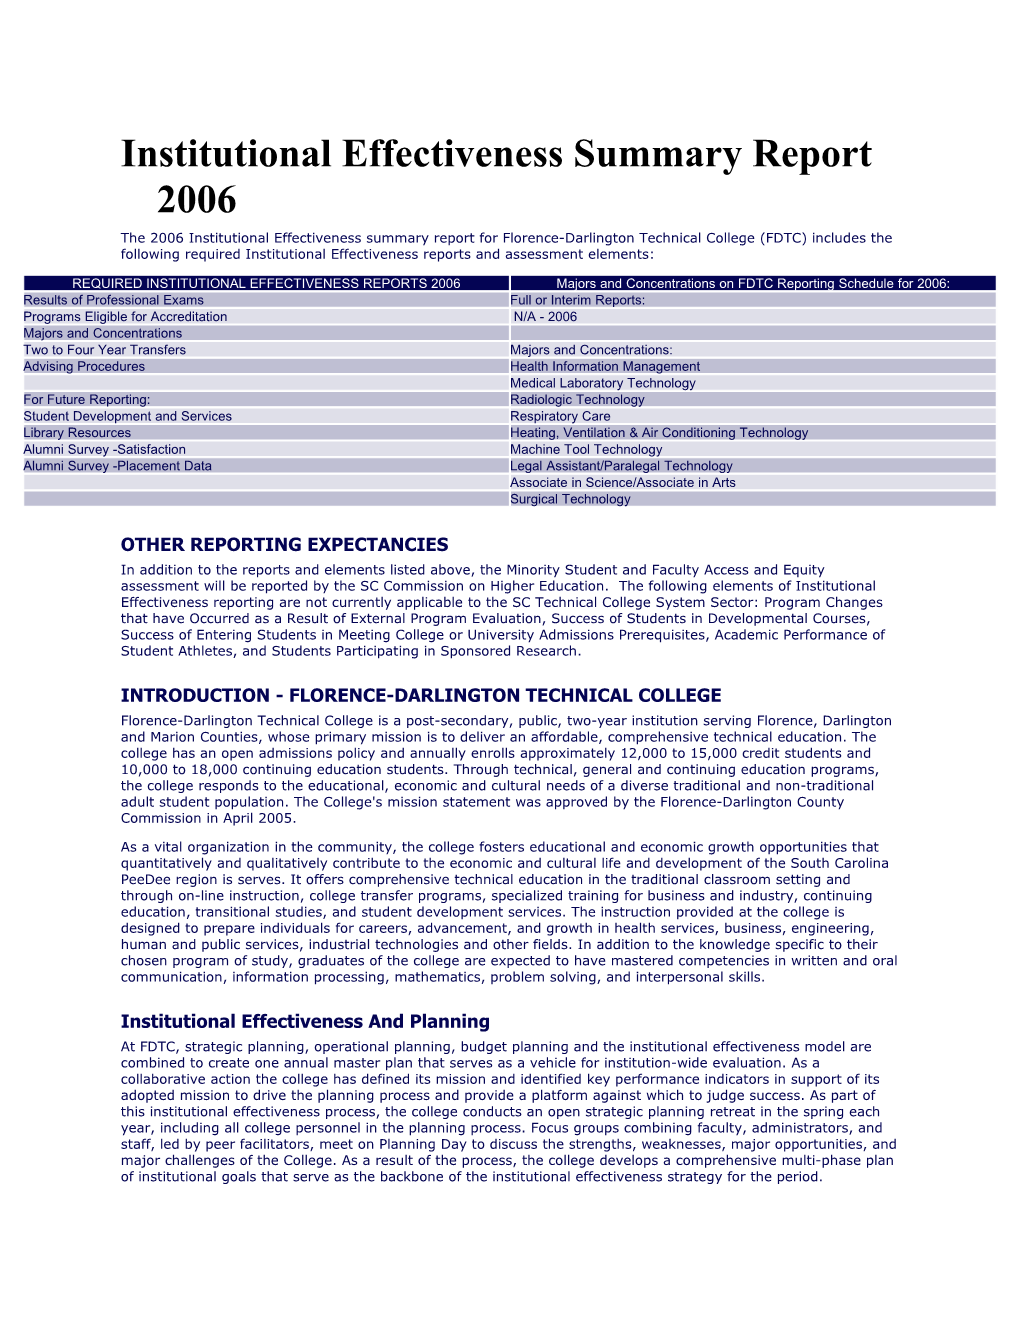 Institutional Effectiveness Summary Report 2006